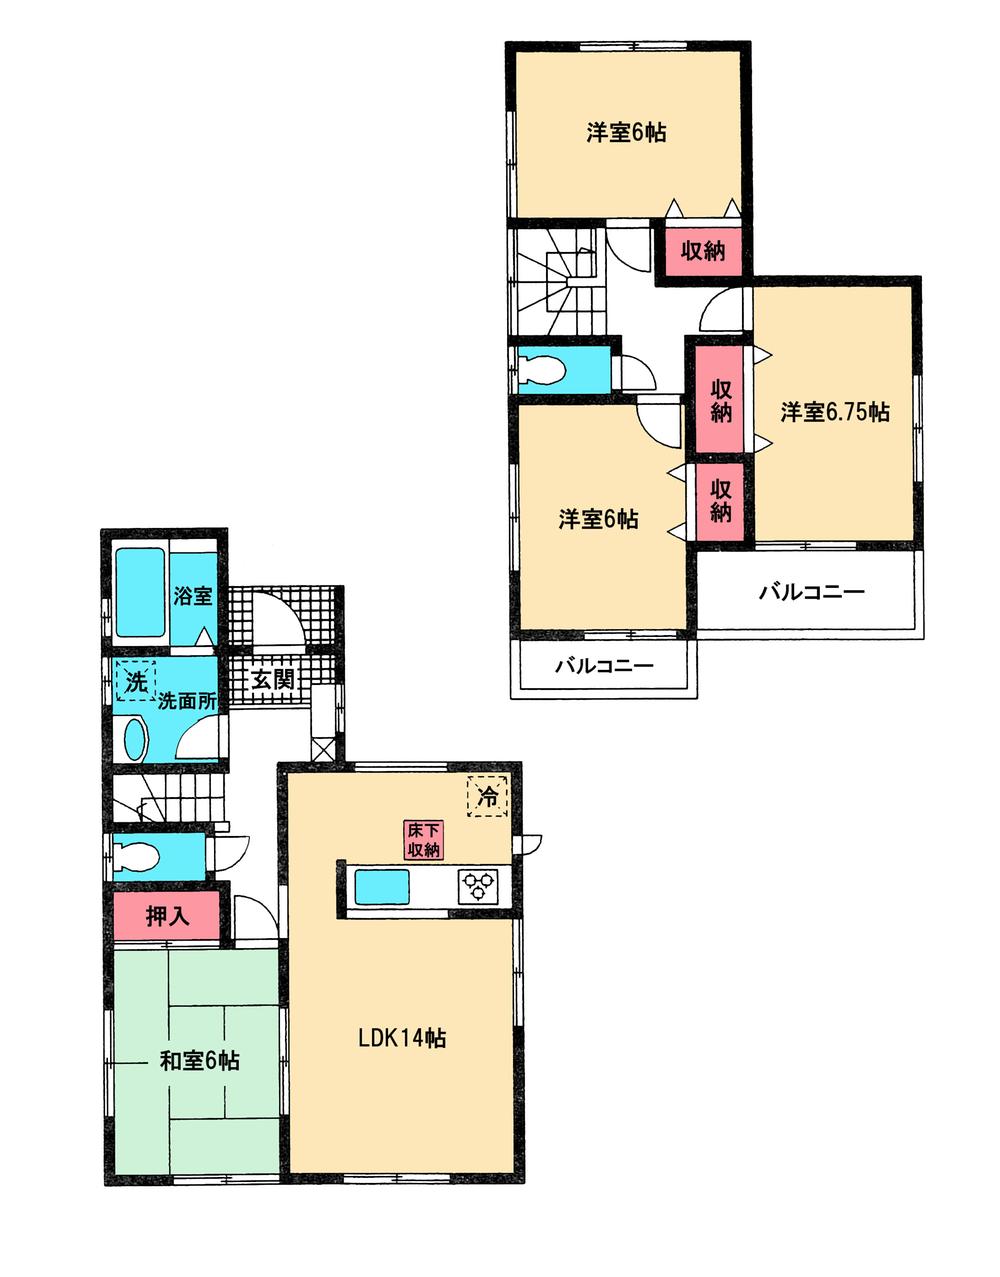 Floor plan. 30,300,000 yen, 4LDK, Land area 125.2 sq m , Building area 93.57 sq m